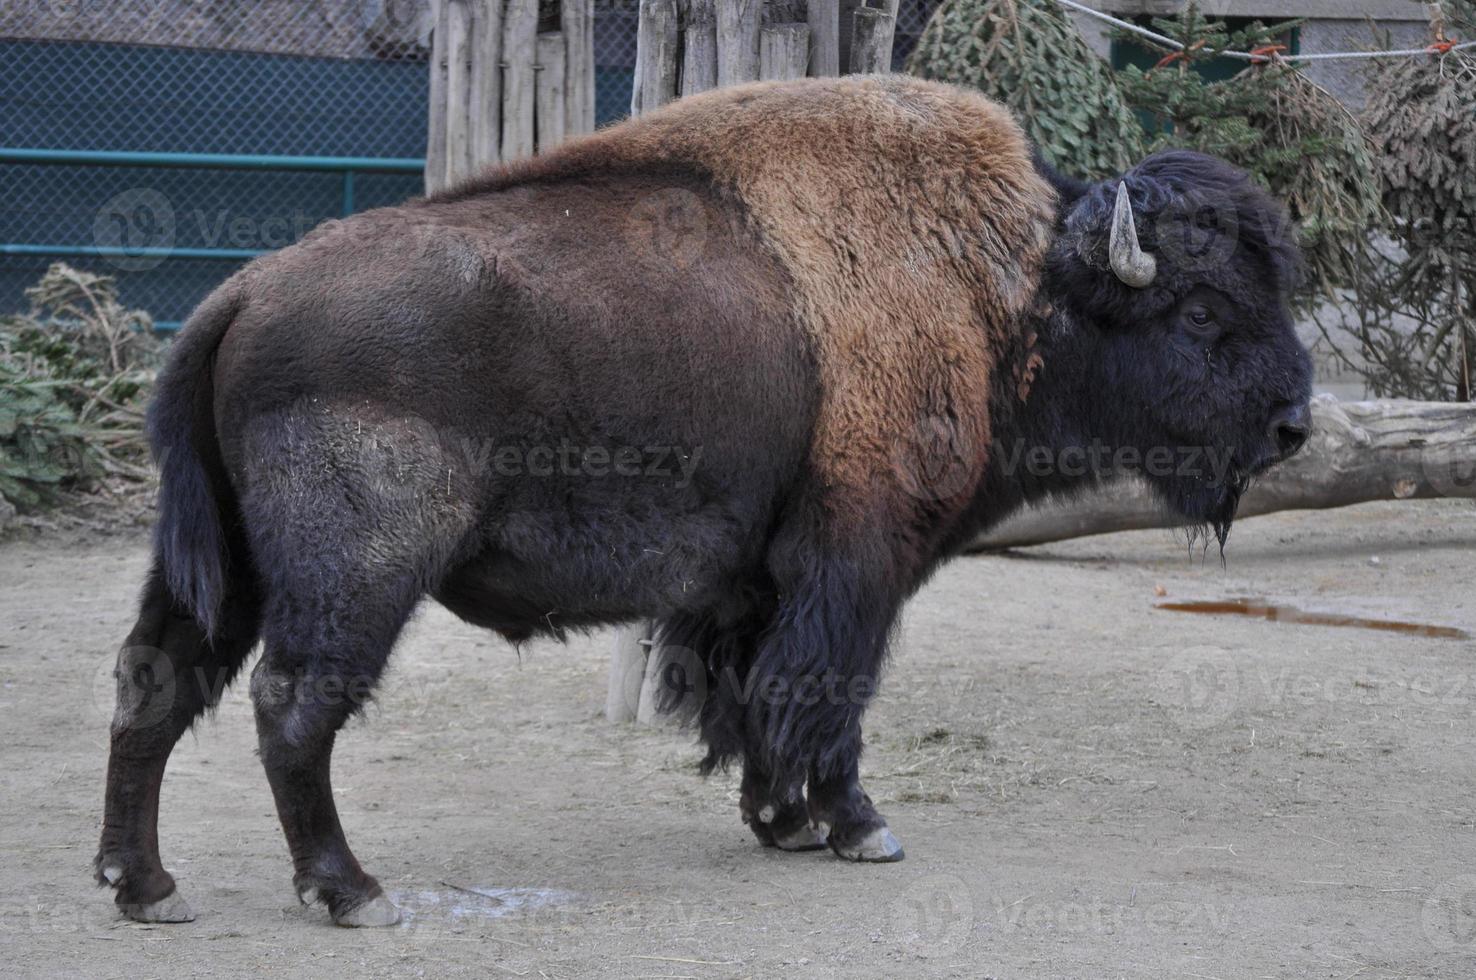 animal mammifère bison américain photo